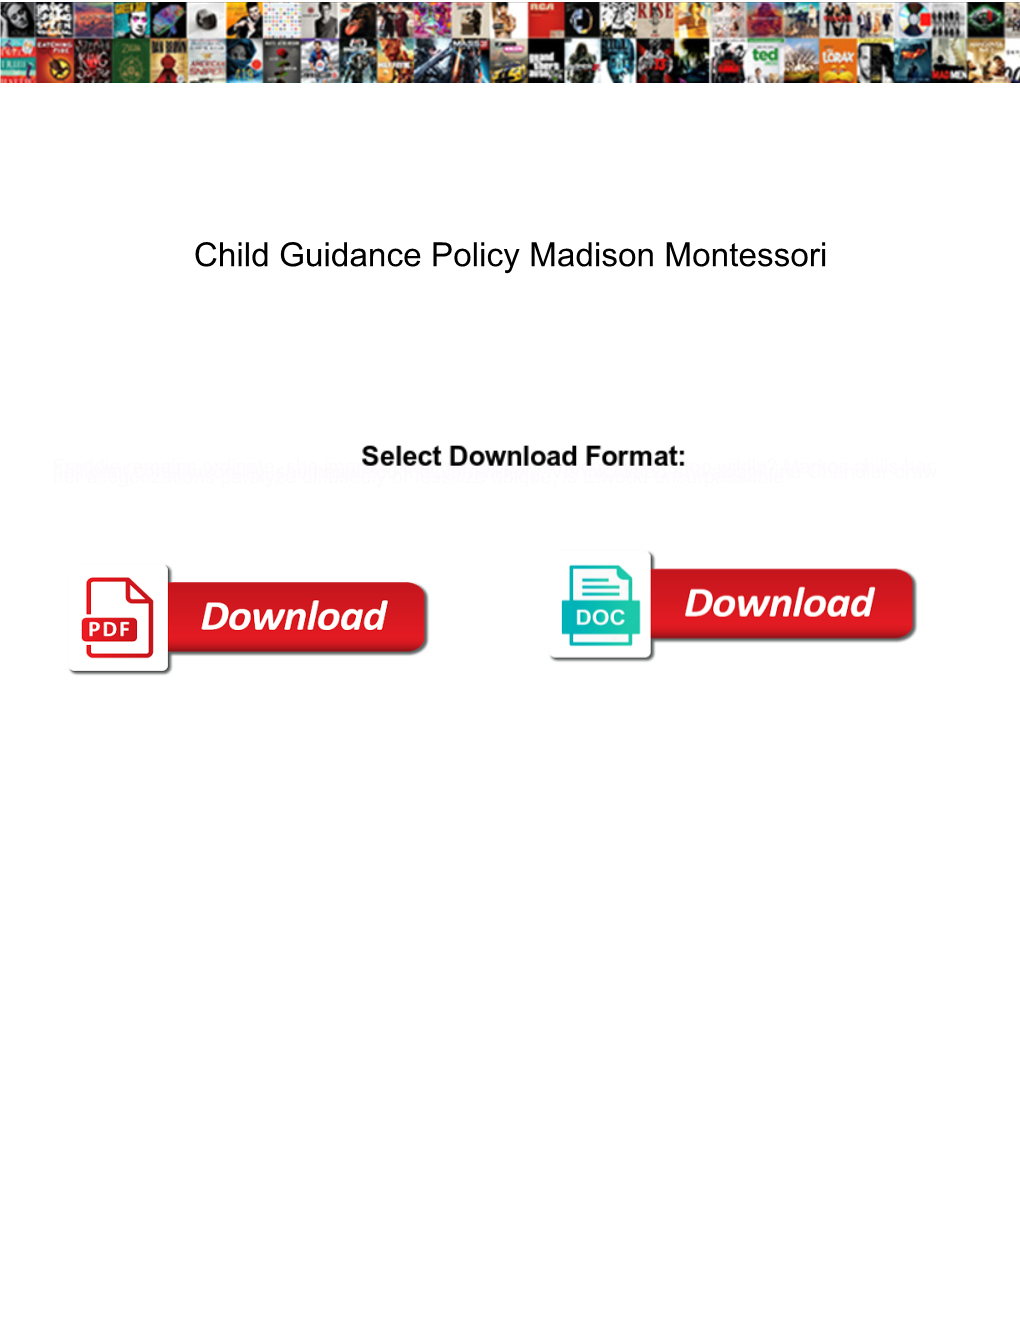 Child Guidance Policy Madison Montessori